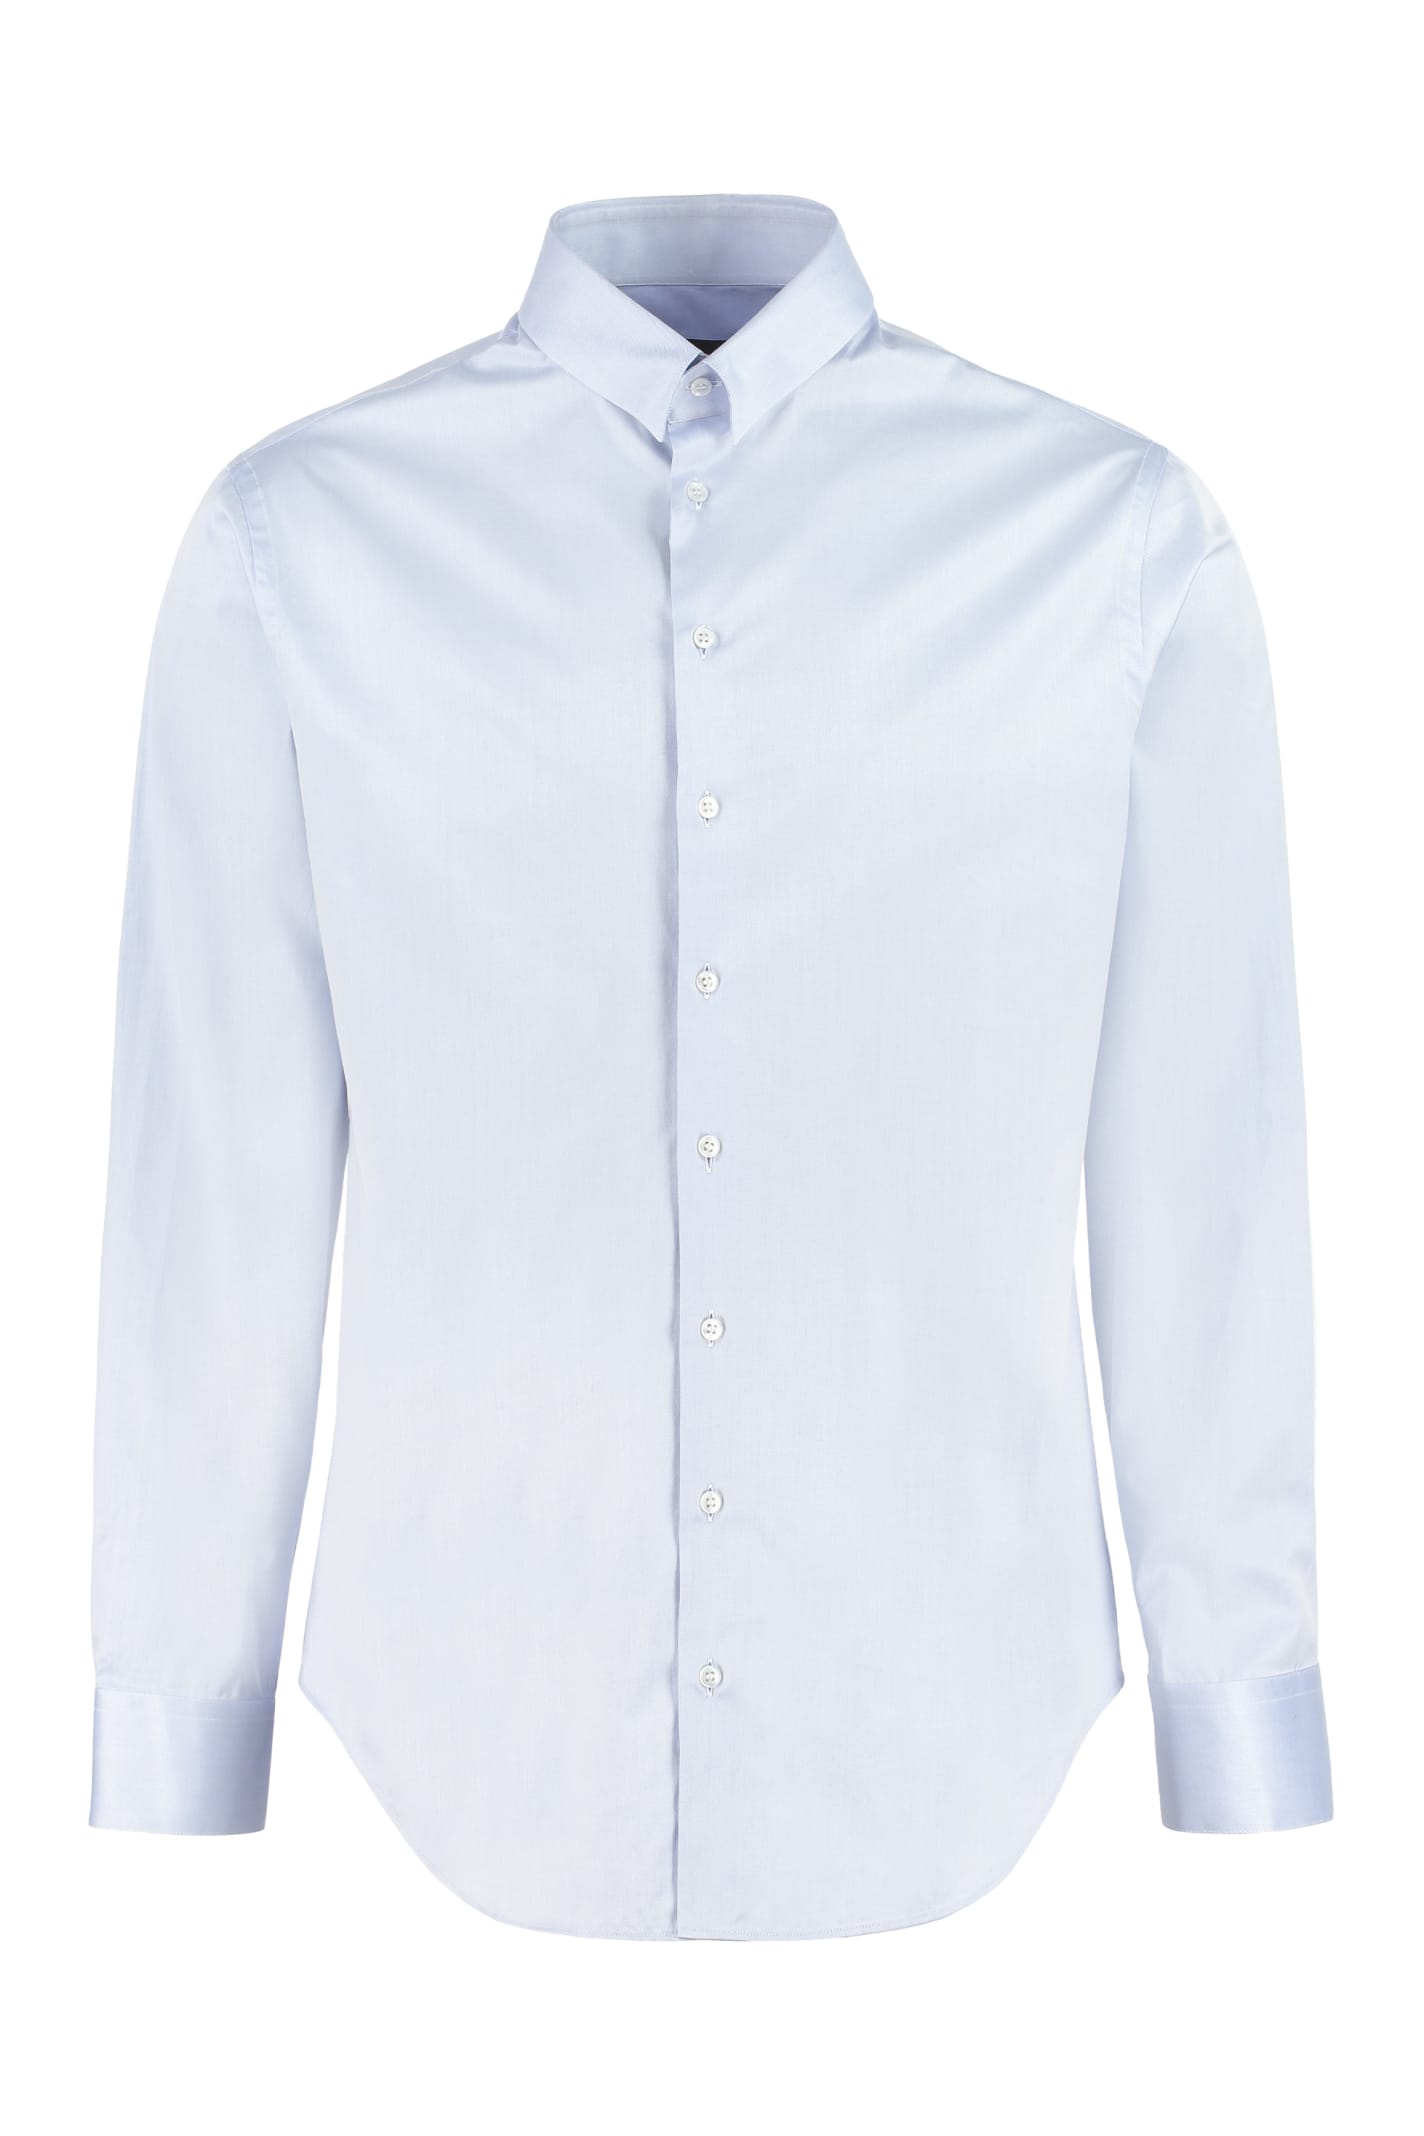 Giorgio Armani Front Buttons Cotton Shirt